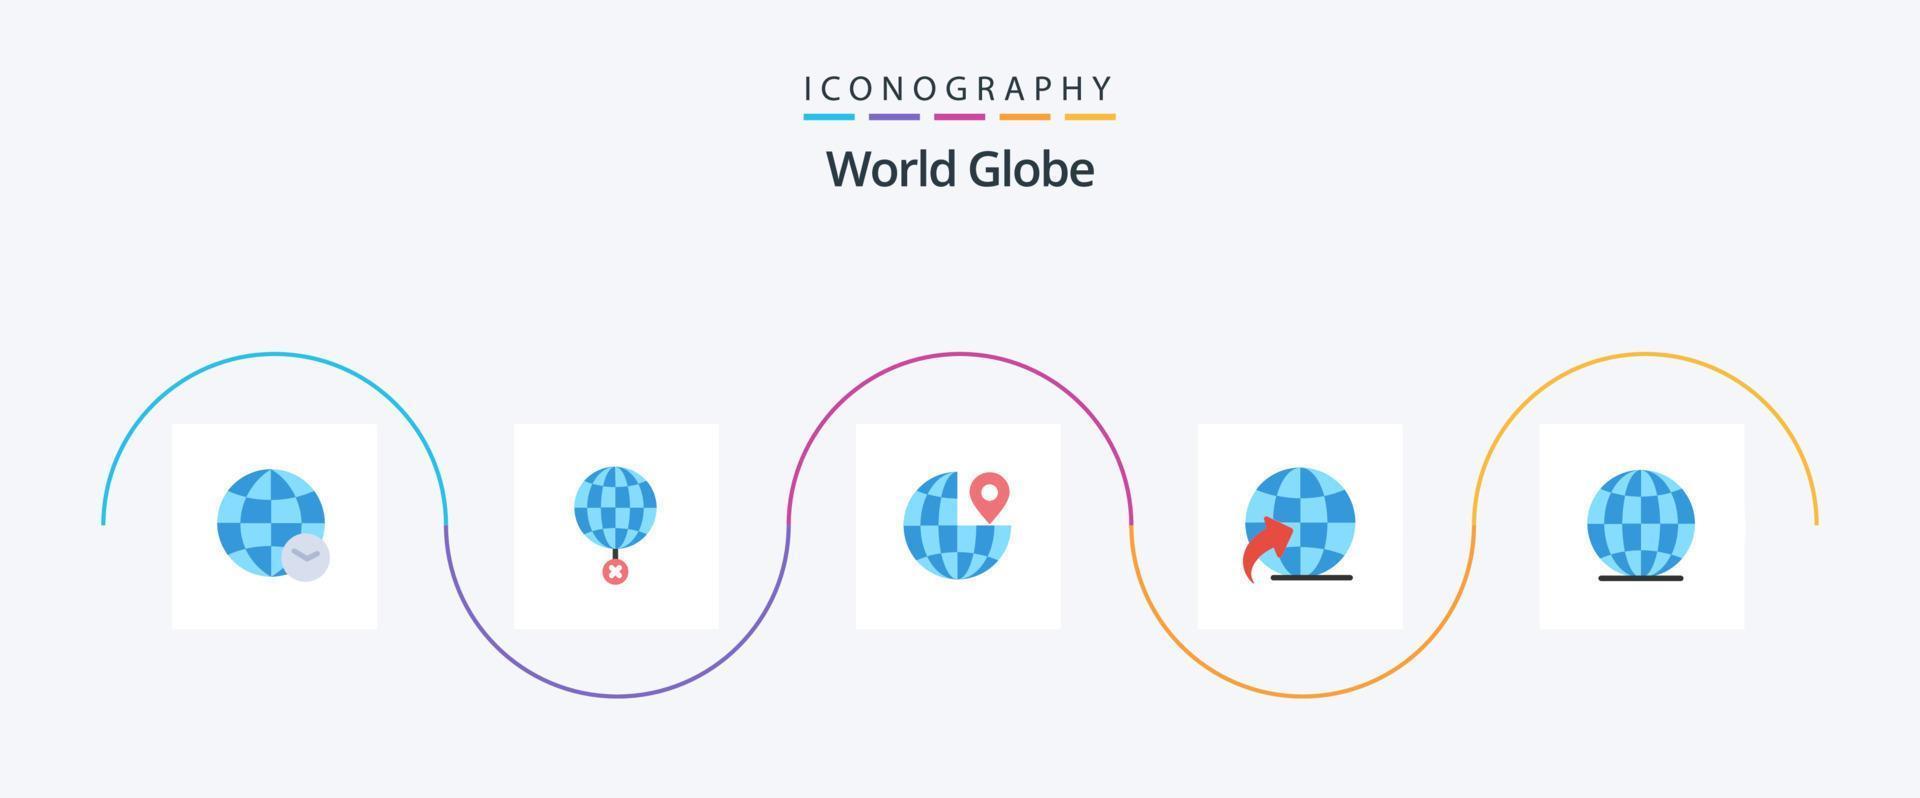 klot platt 5 ikon packa Inklusive värld. global. croos. resa. pil vektor